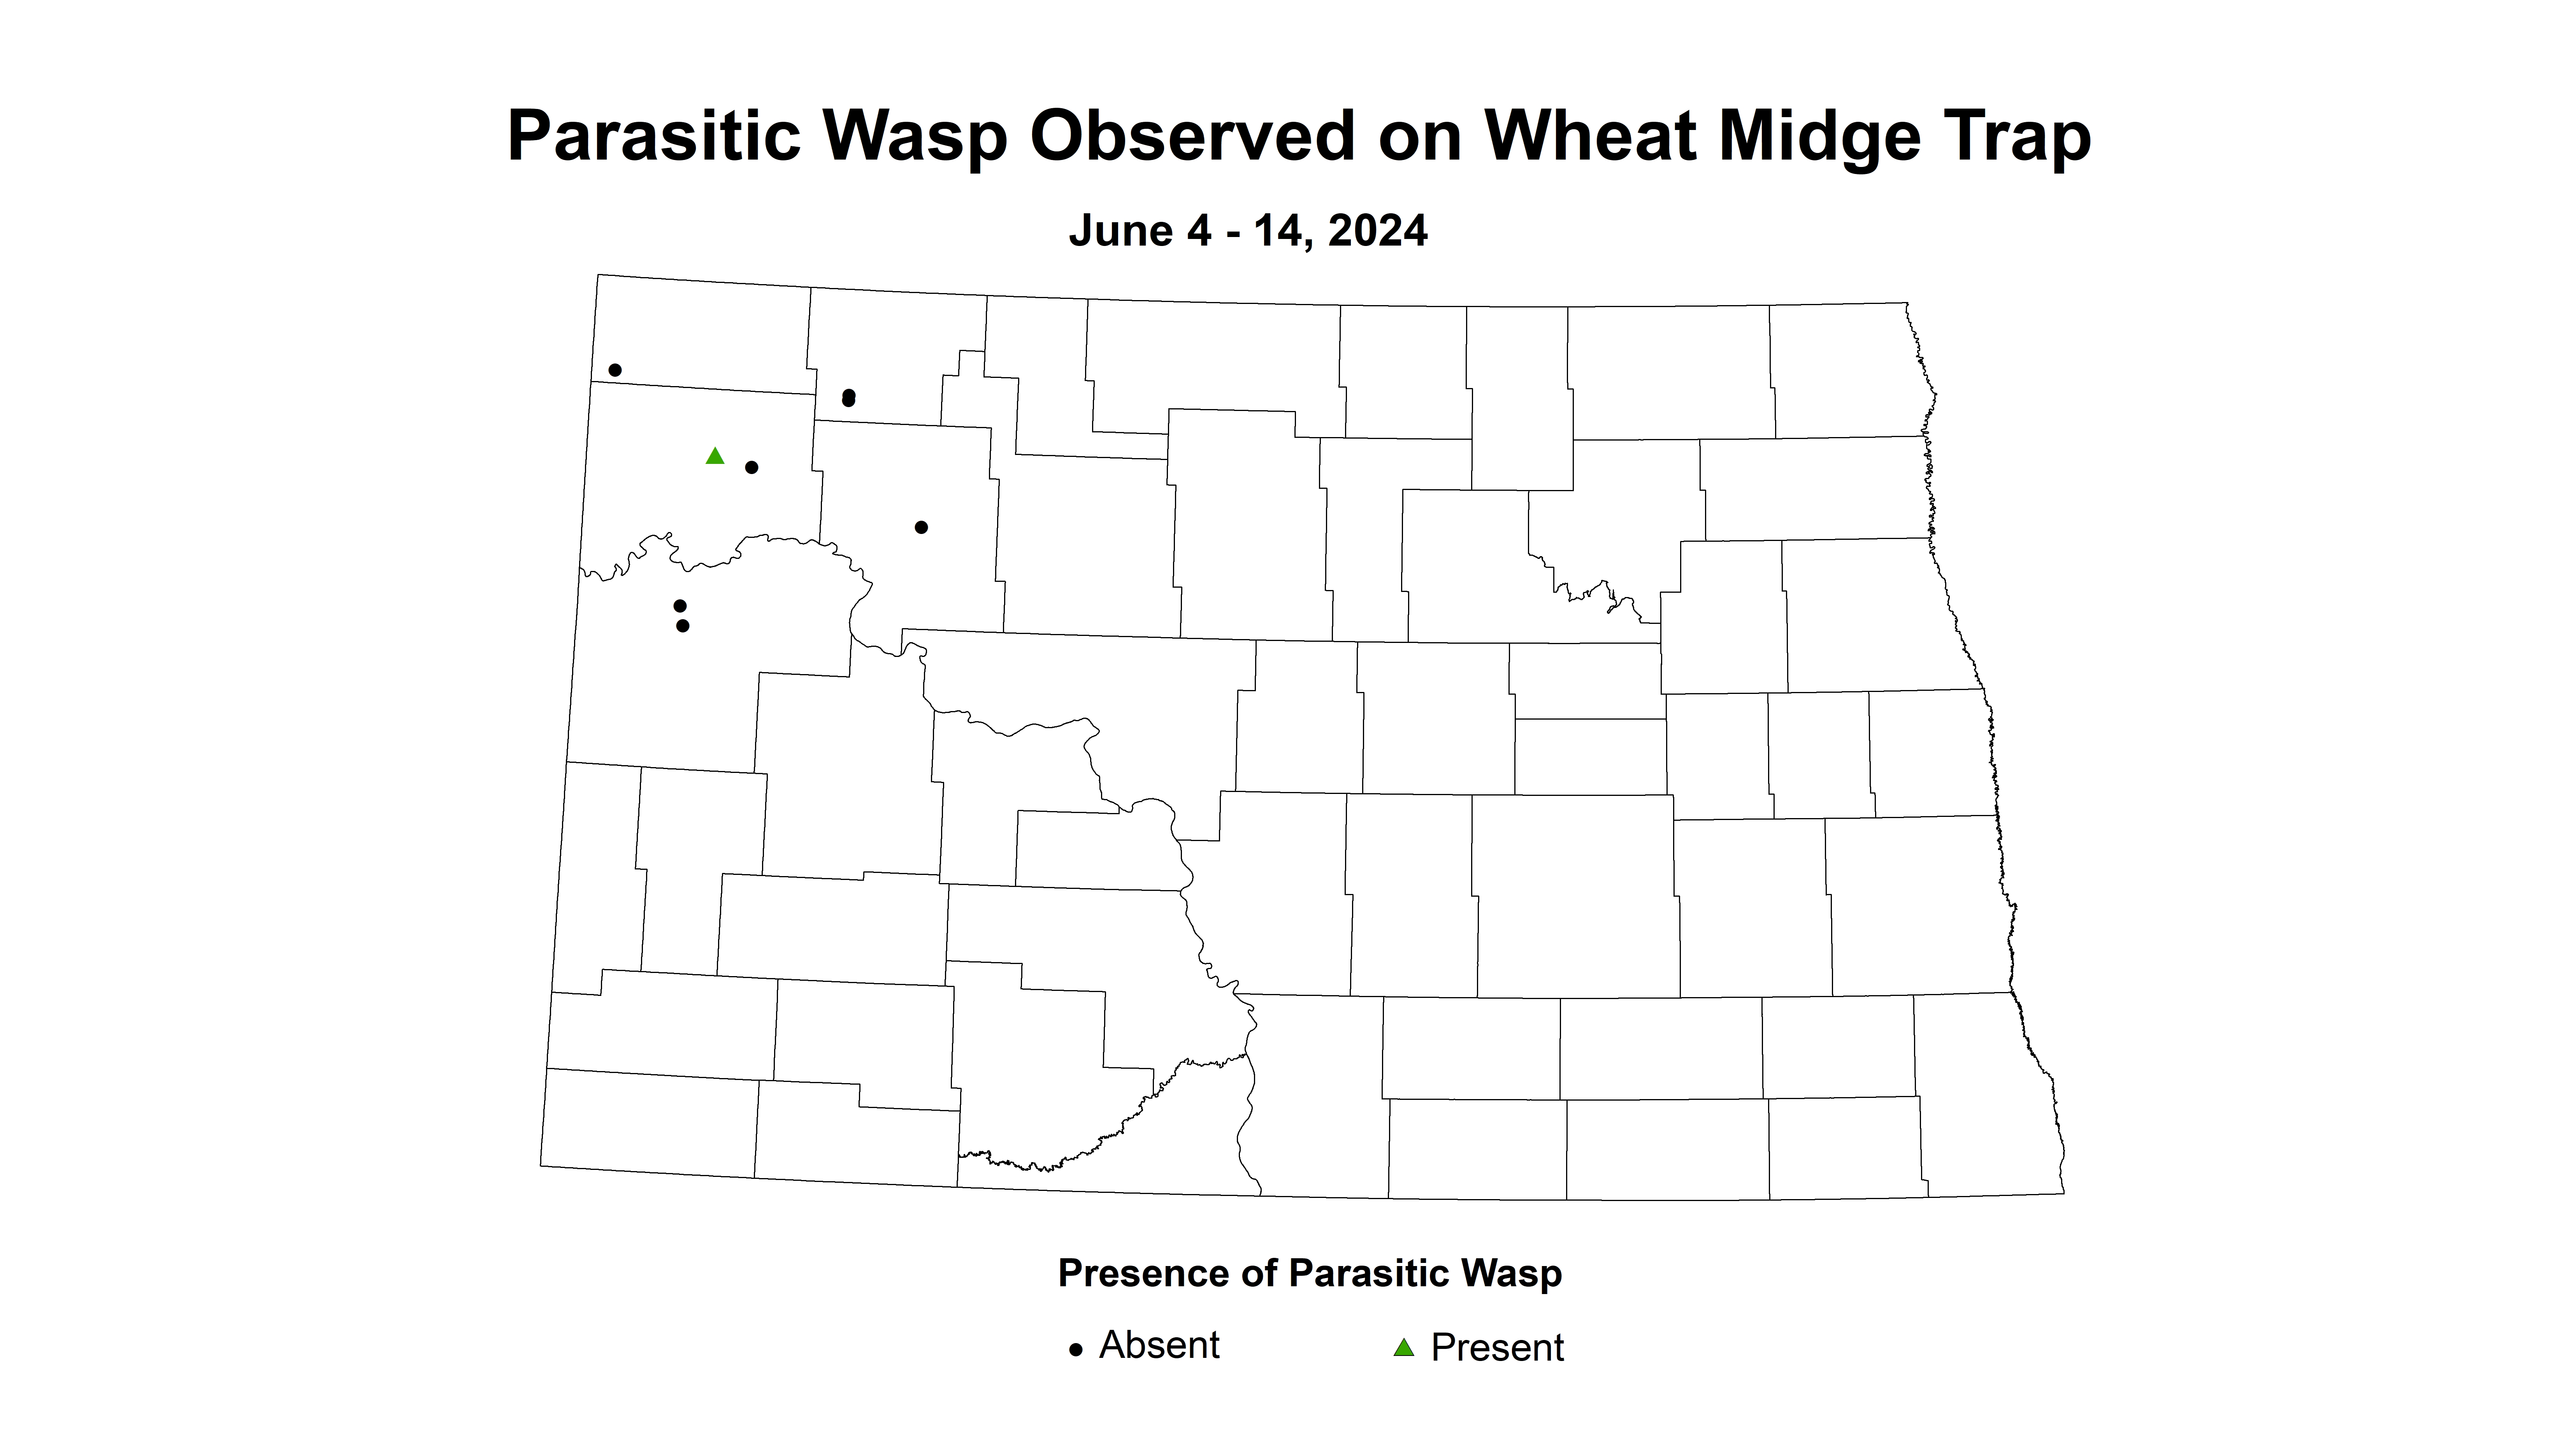 wheat midge trap parasitic wasp June 4-14 2024